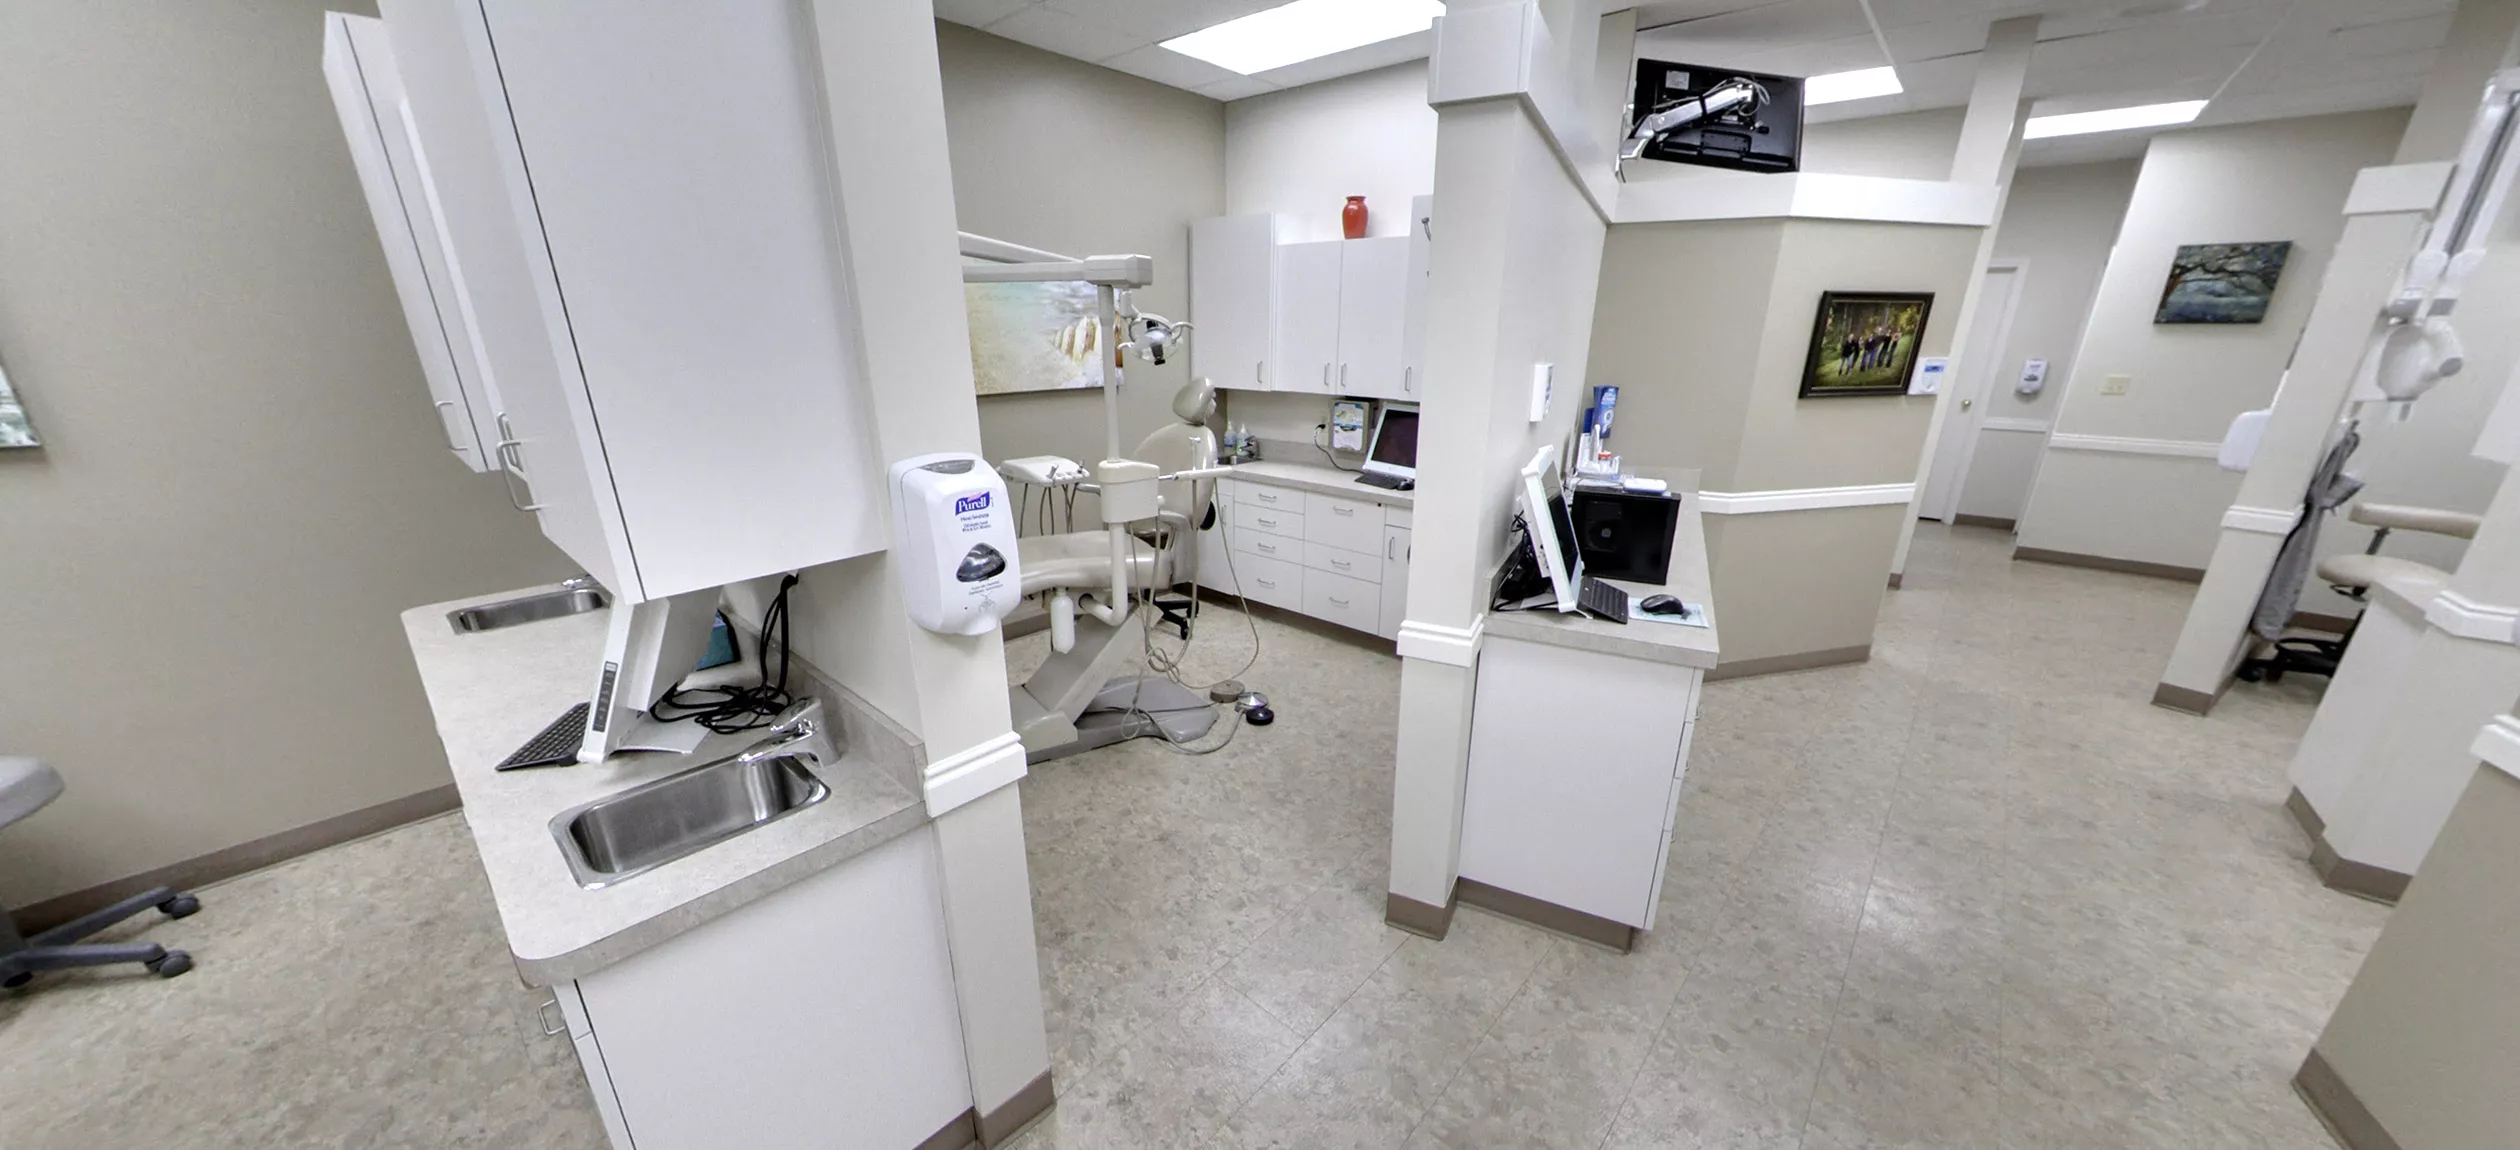 Dental operatories at Spearmint Dental